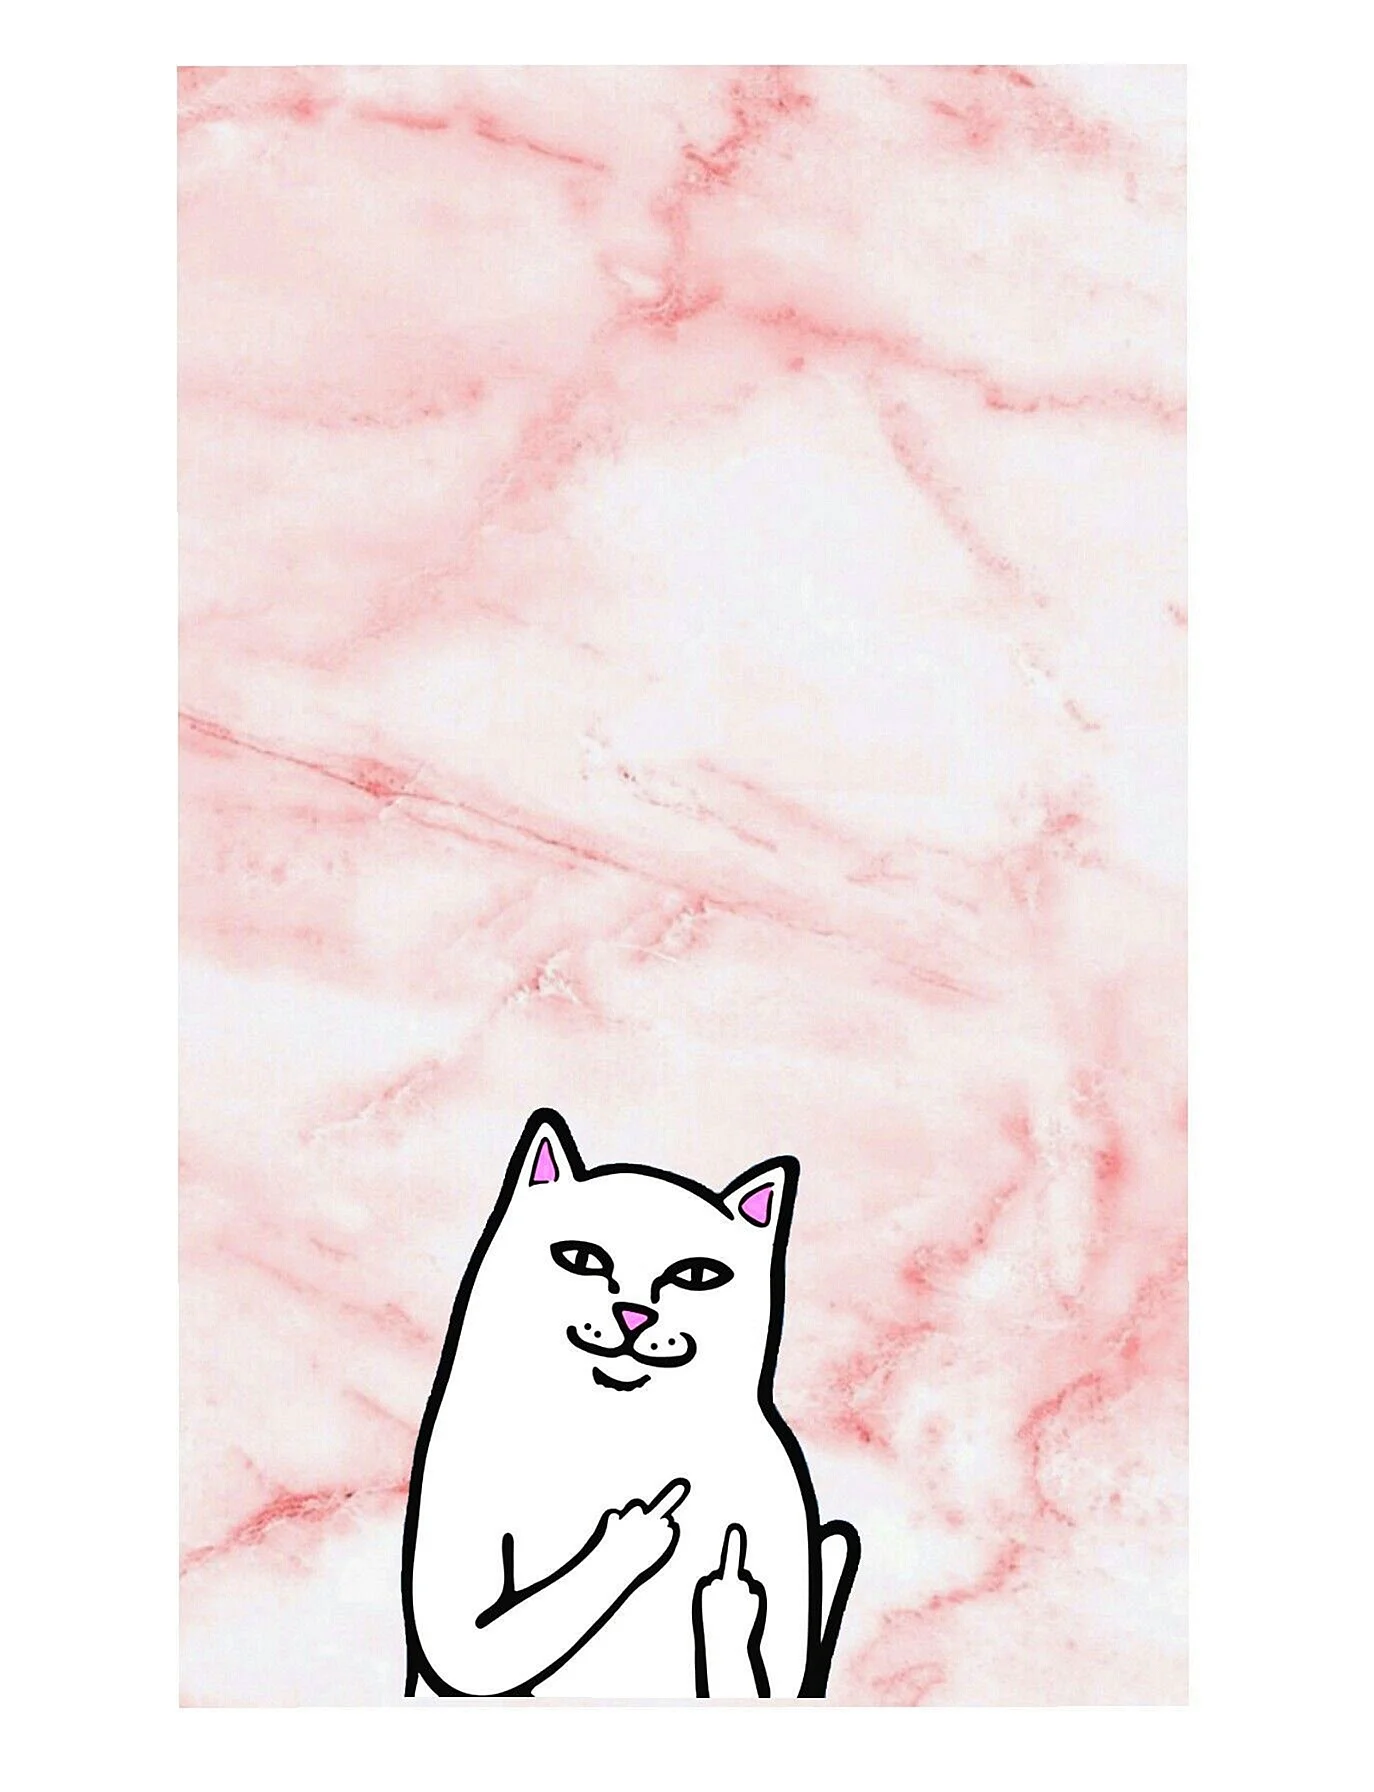 Ripndip Cat Wallpaper